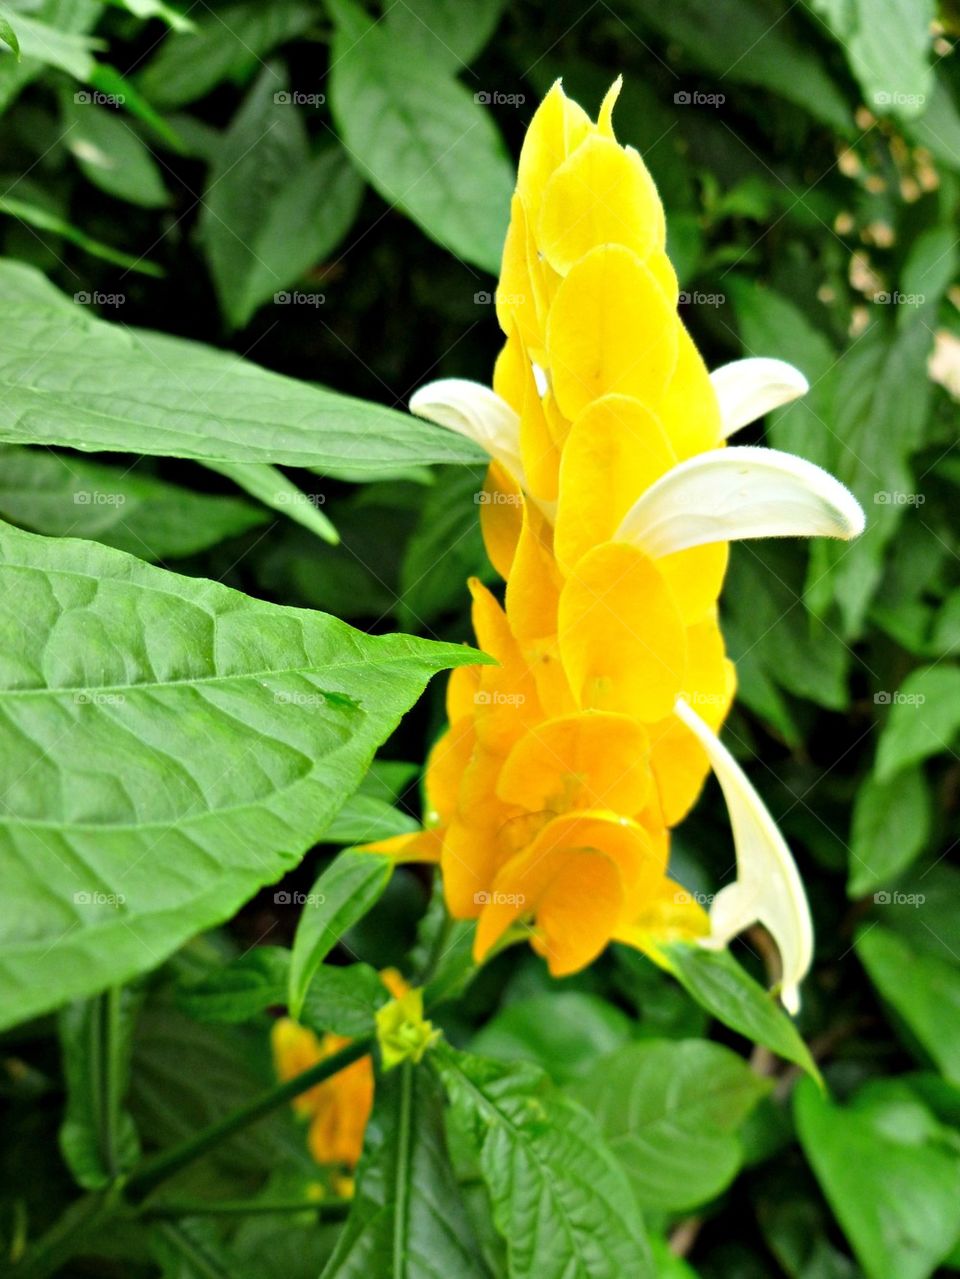 Unusual yellow flower